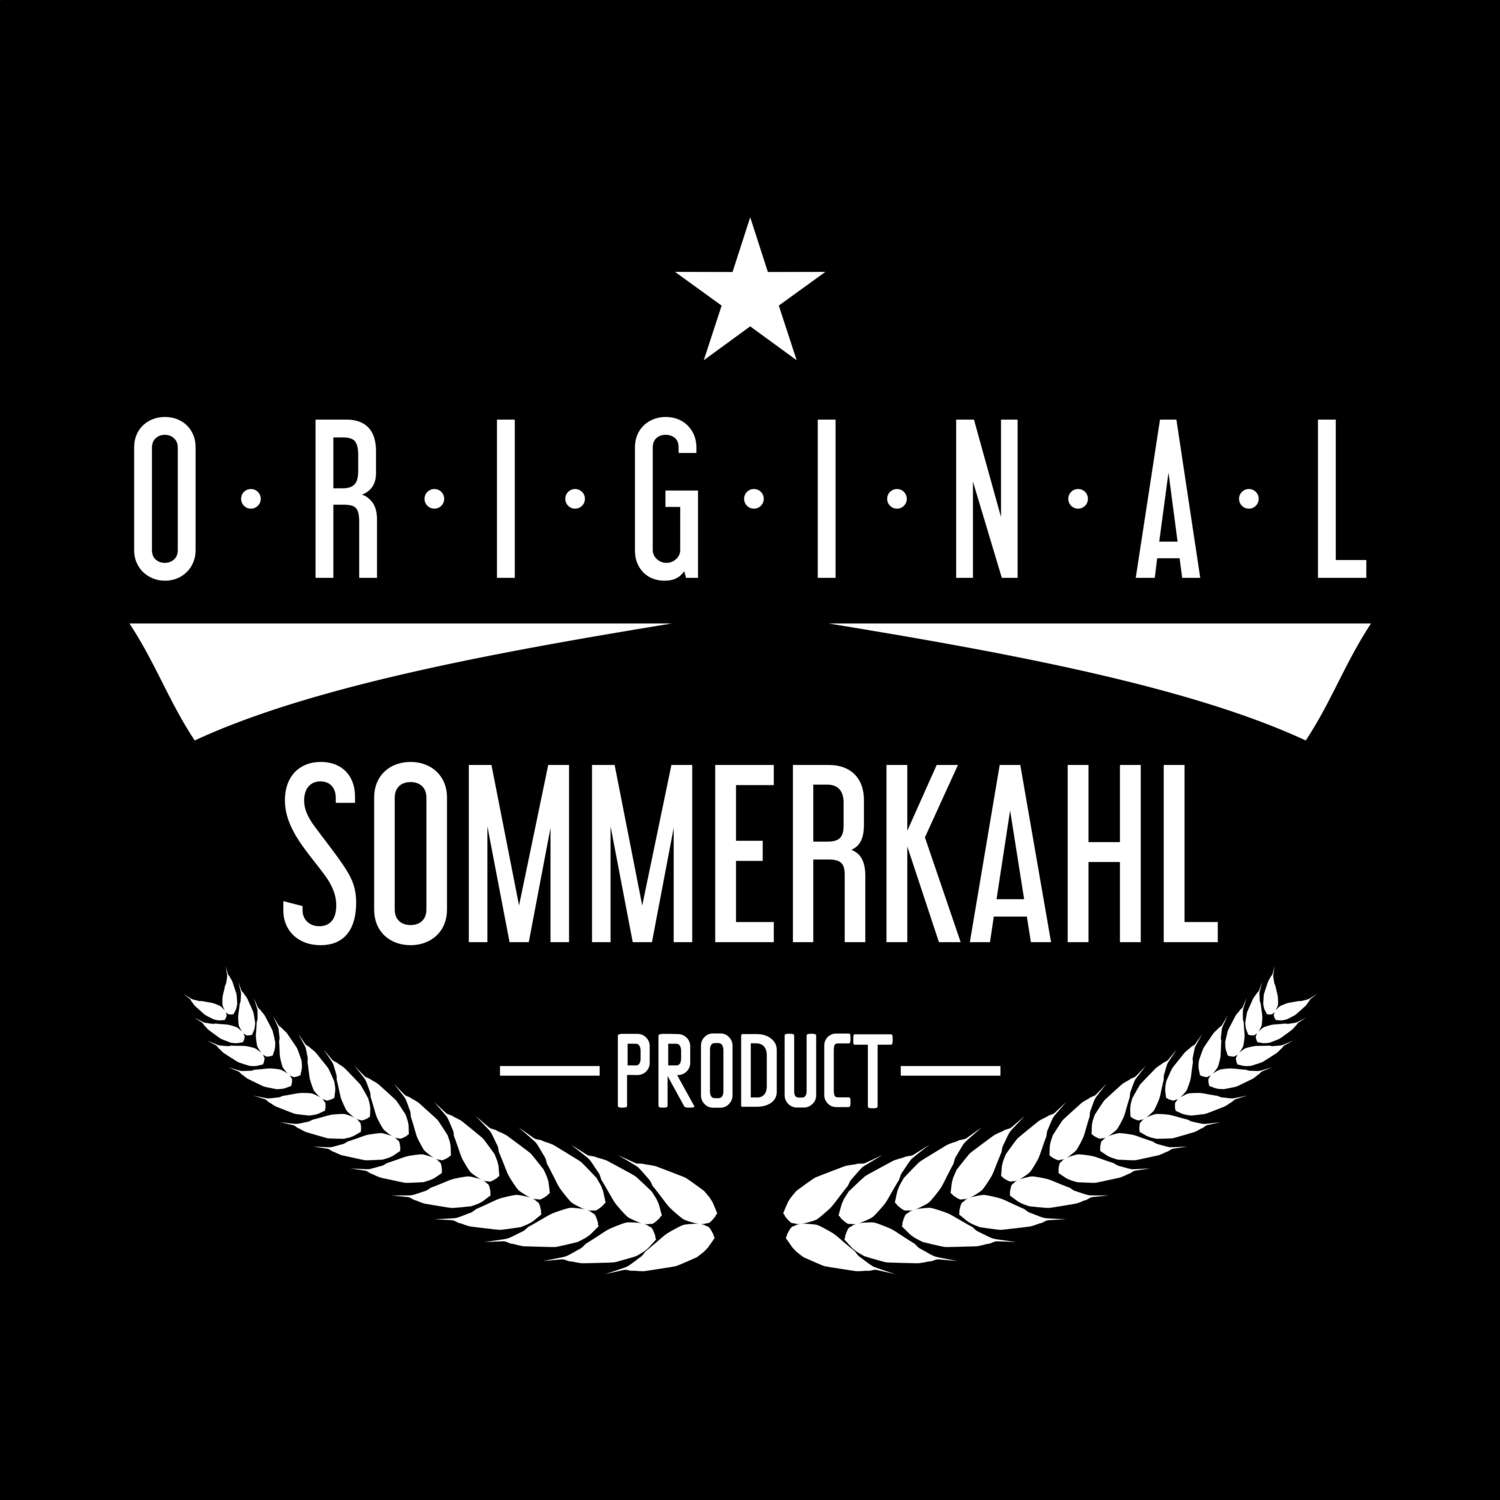 Sommerkahl T-Shirt »Original Product«